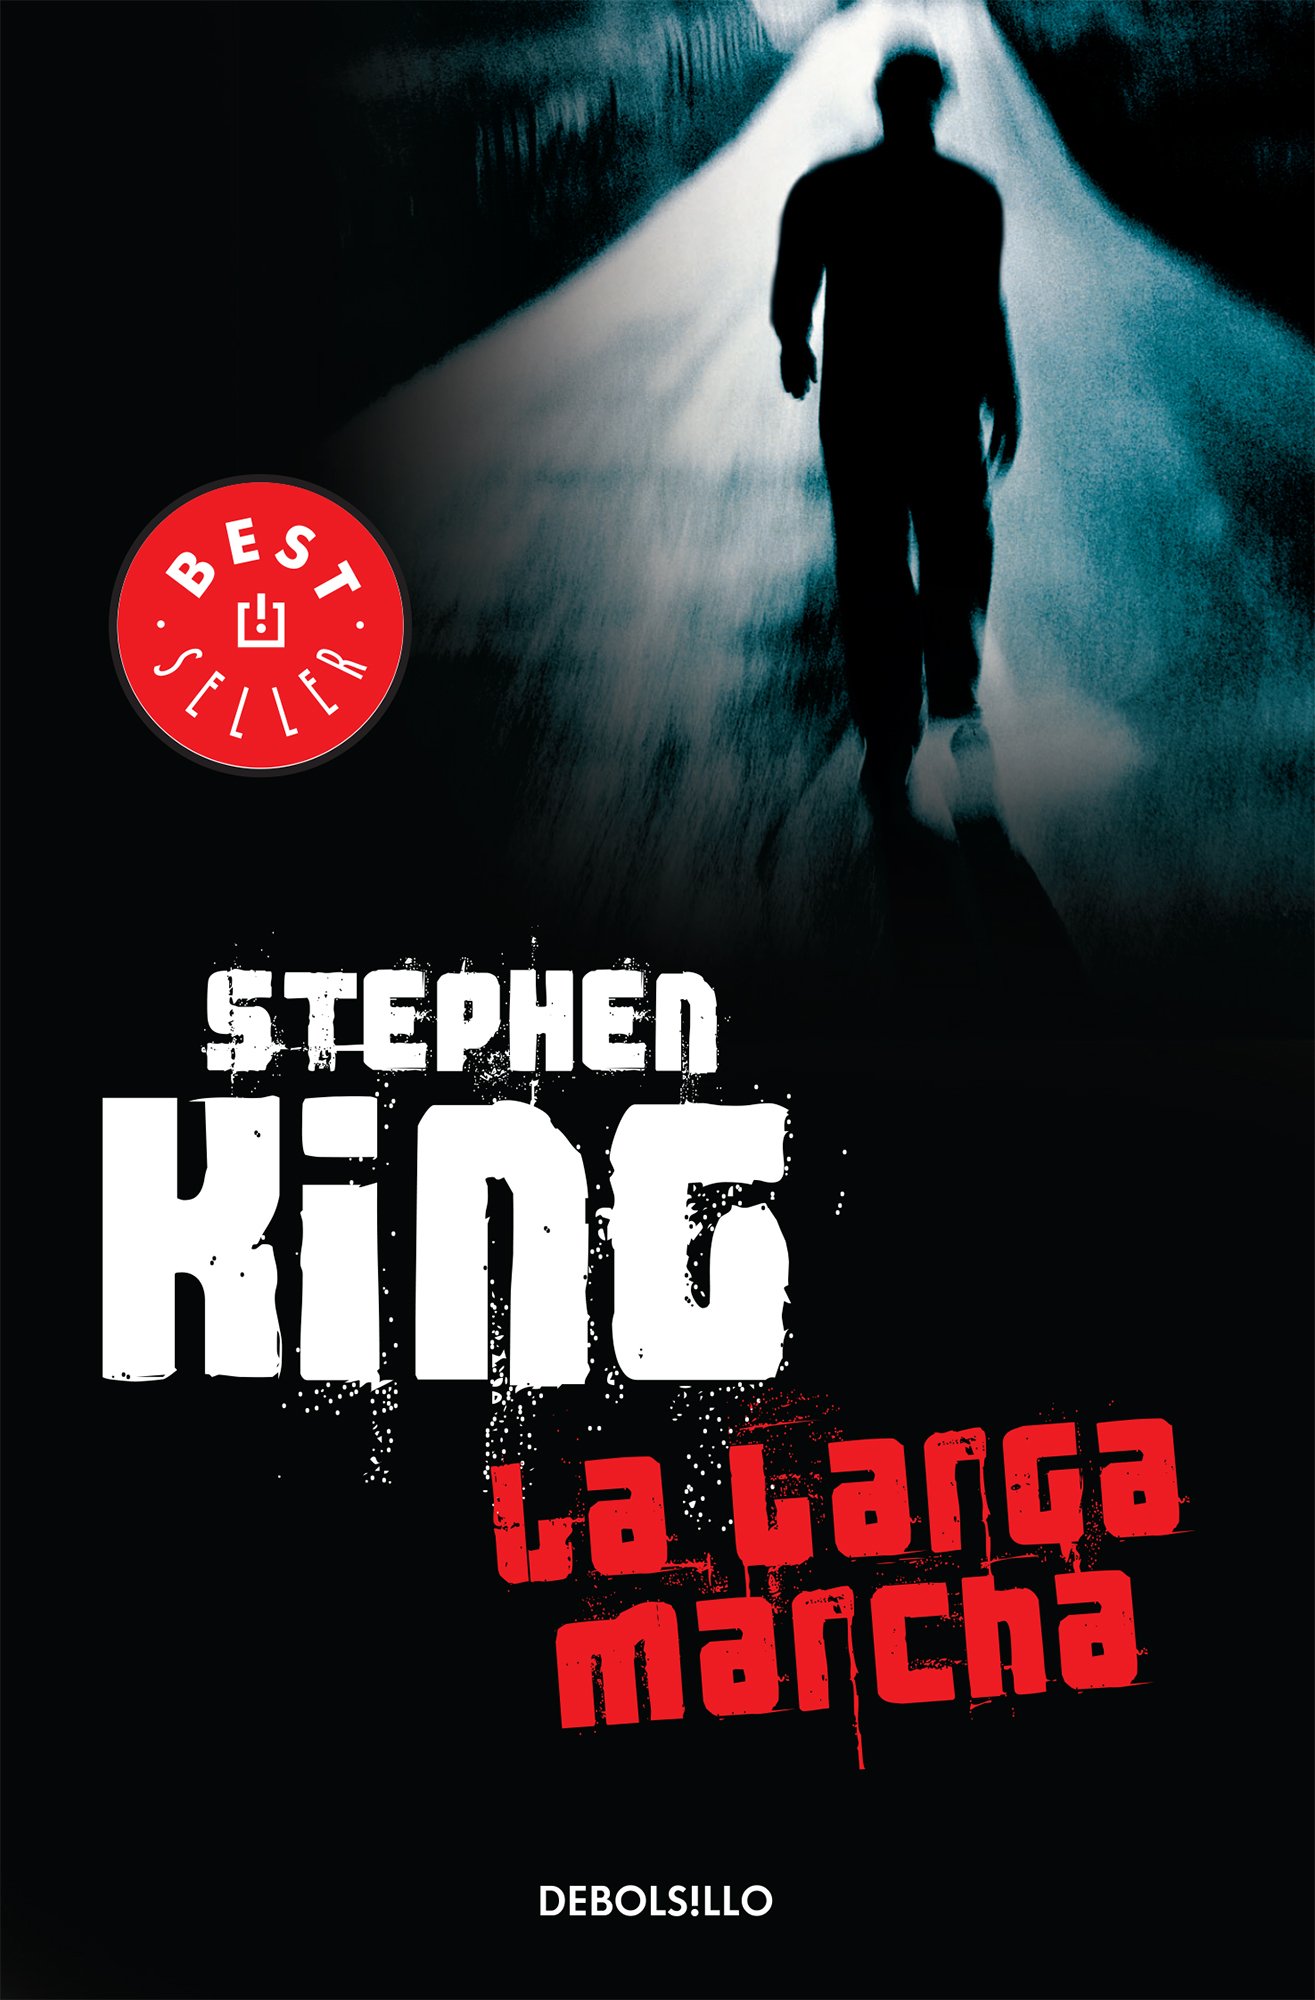 La larga marcha de Stephen King